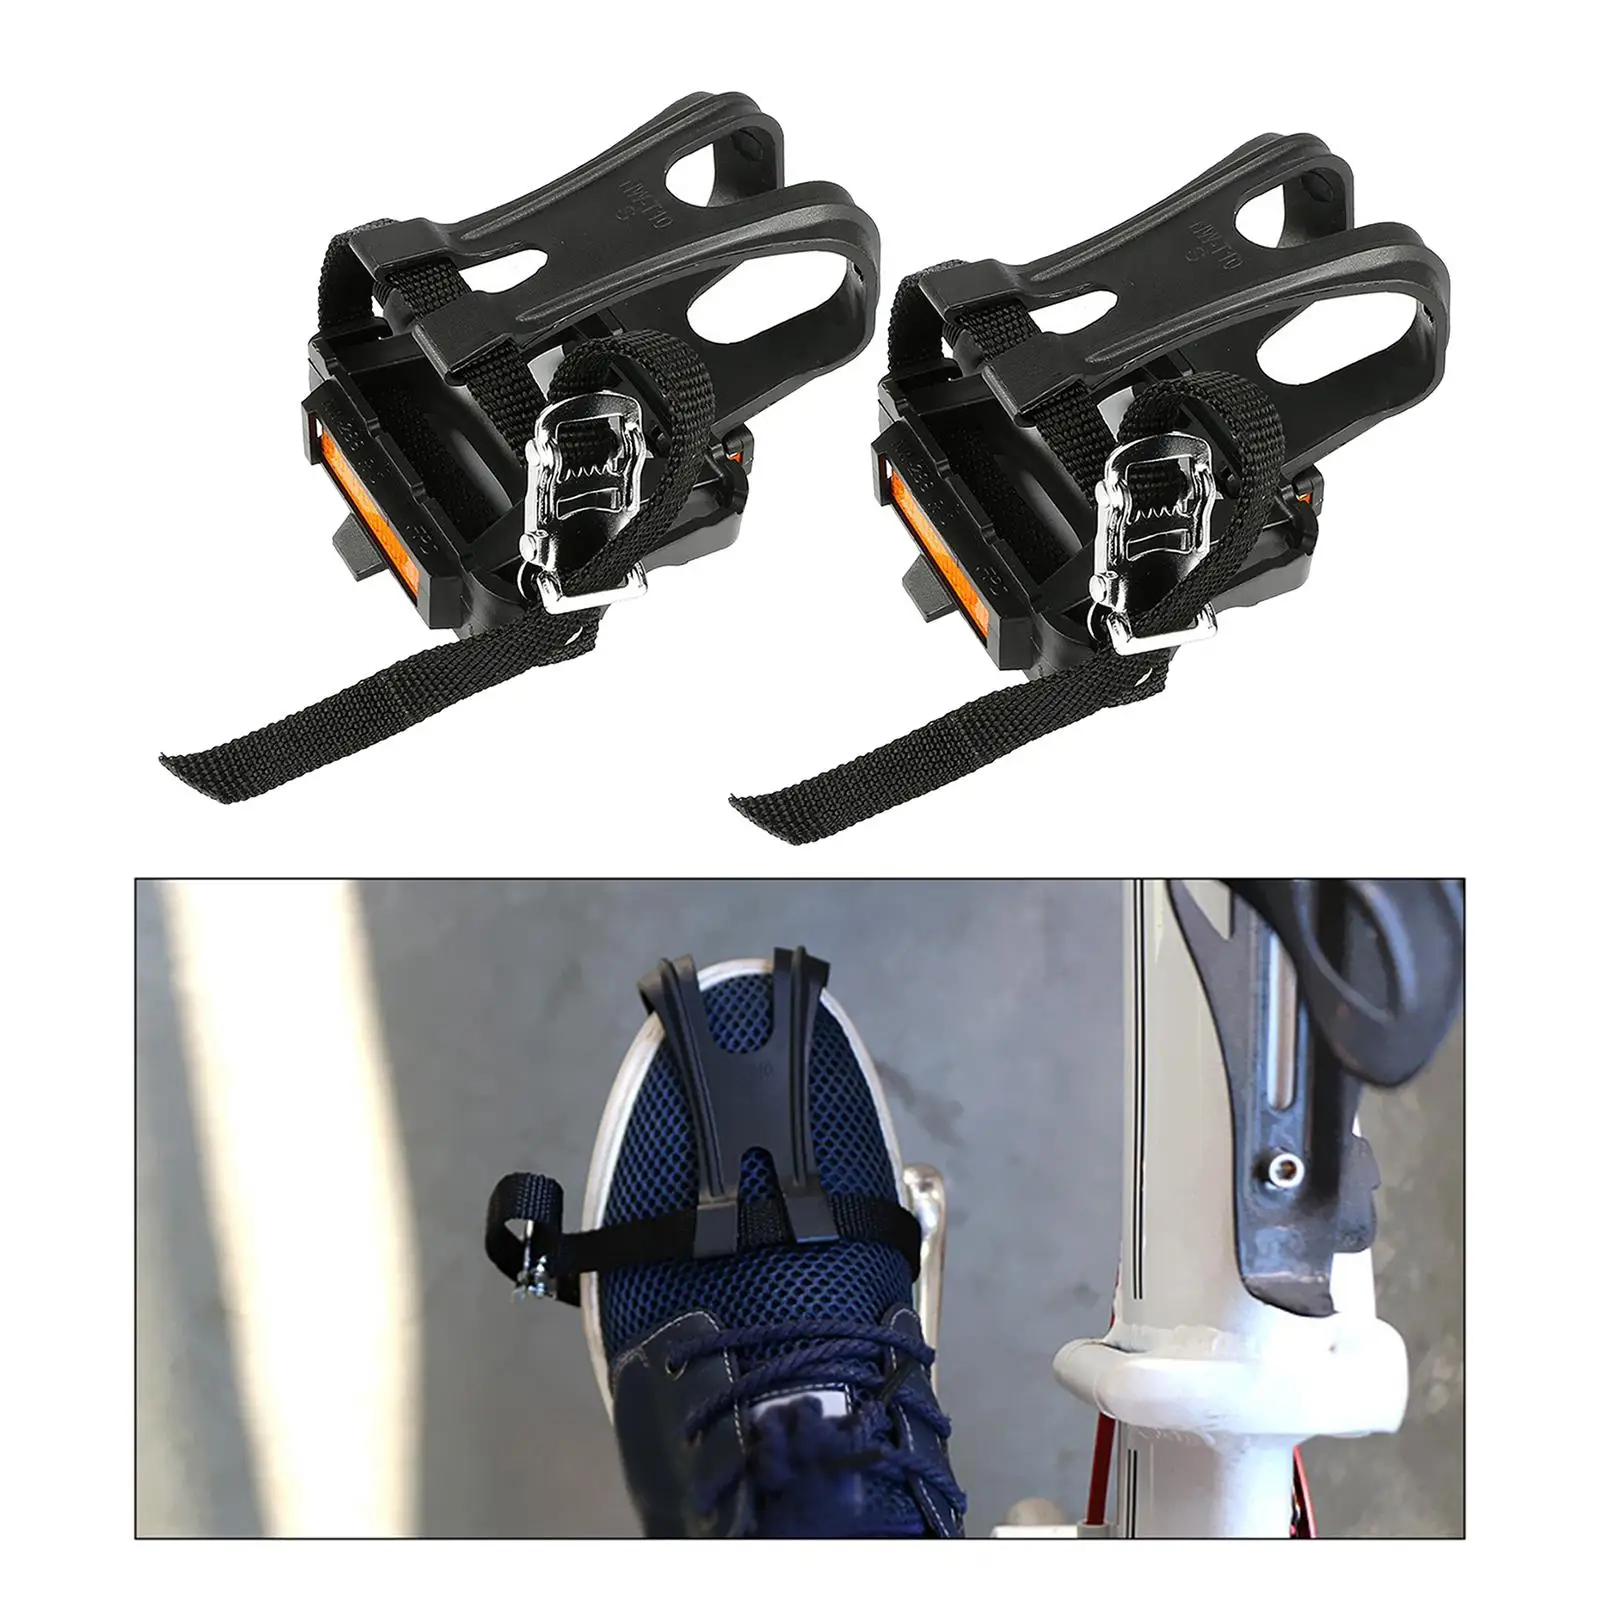 1 Pair Nylon Cycling Bike Pedal Toe Clip Strap Belts for Fixed Bike